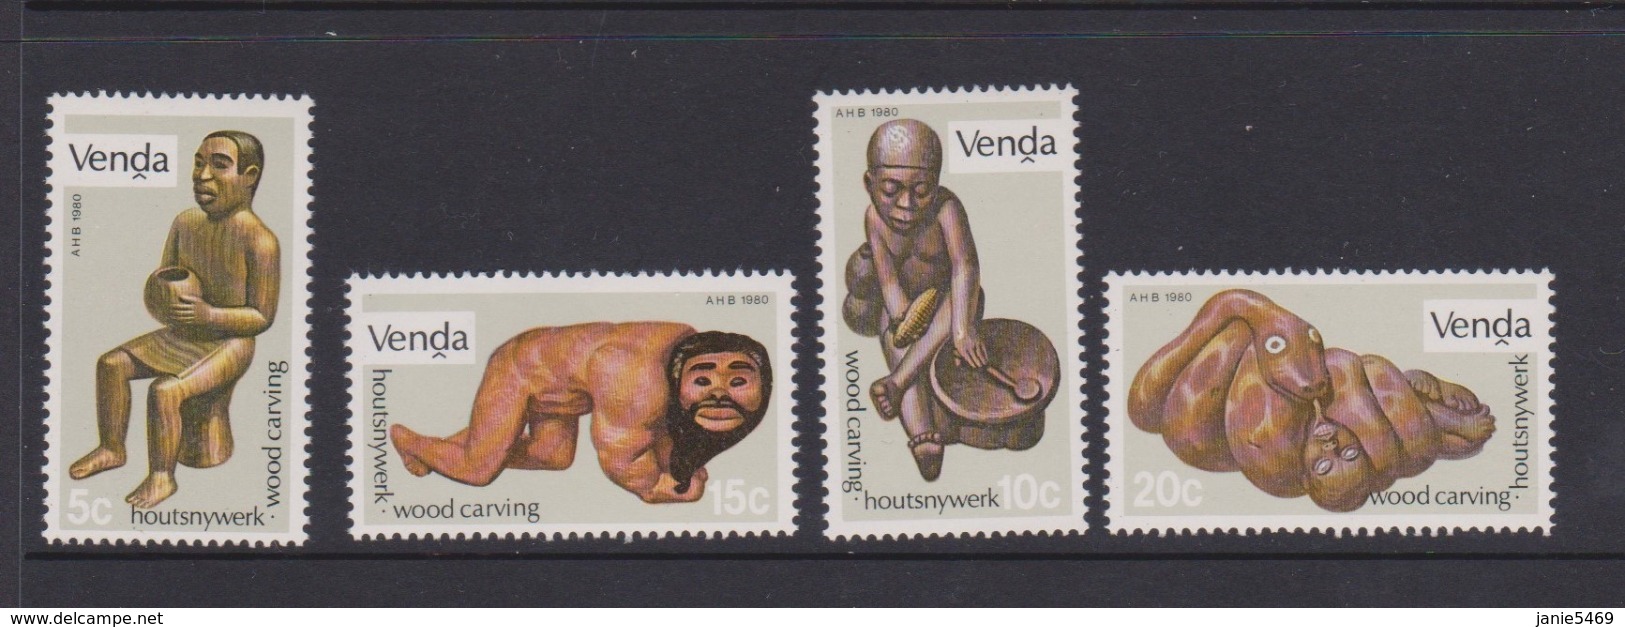 South Africa-Venda SG 22-25 1980 Wood Carving,Mint Never Hinged - Venda